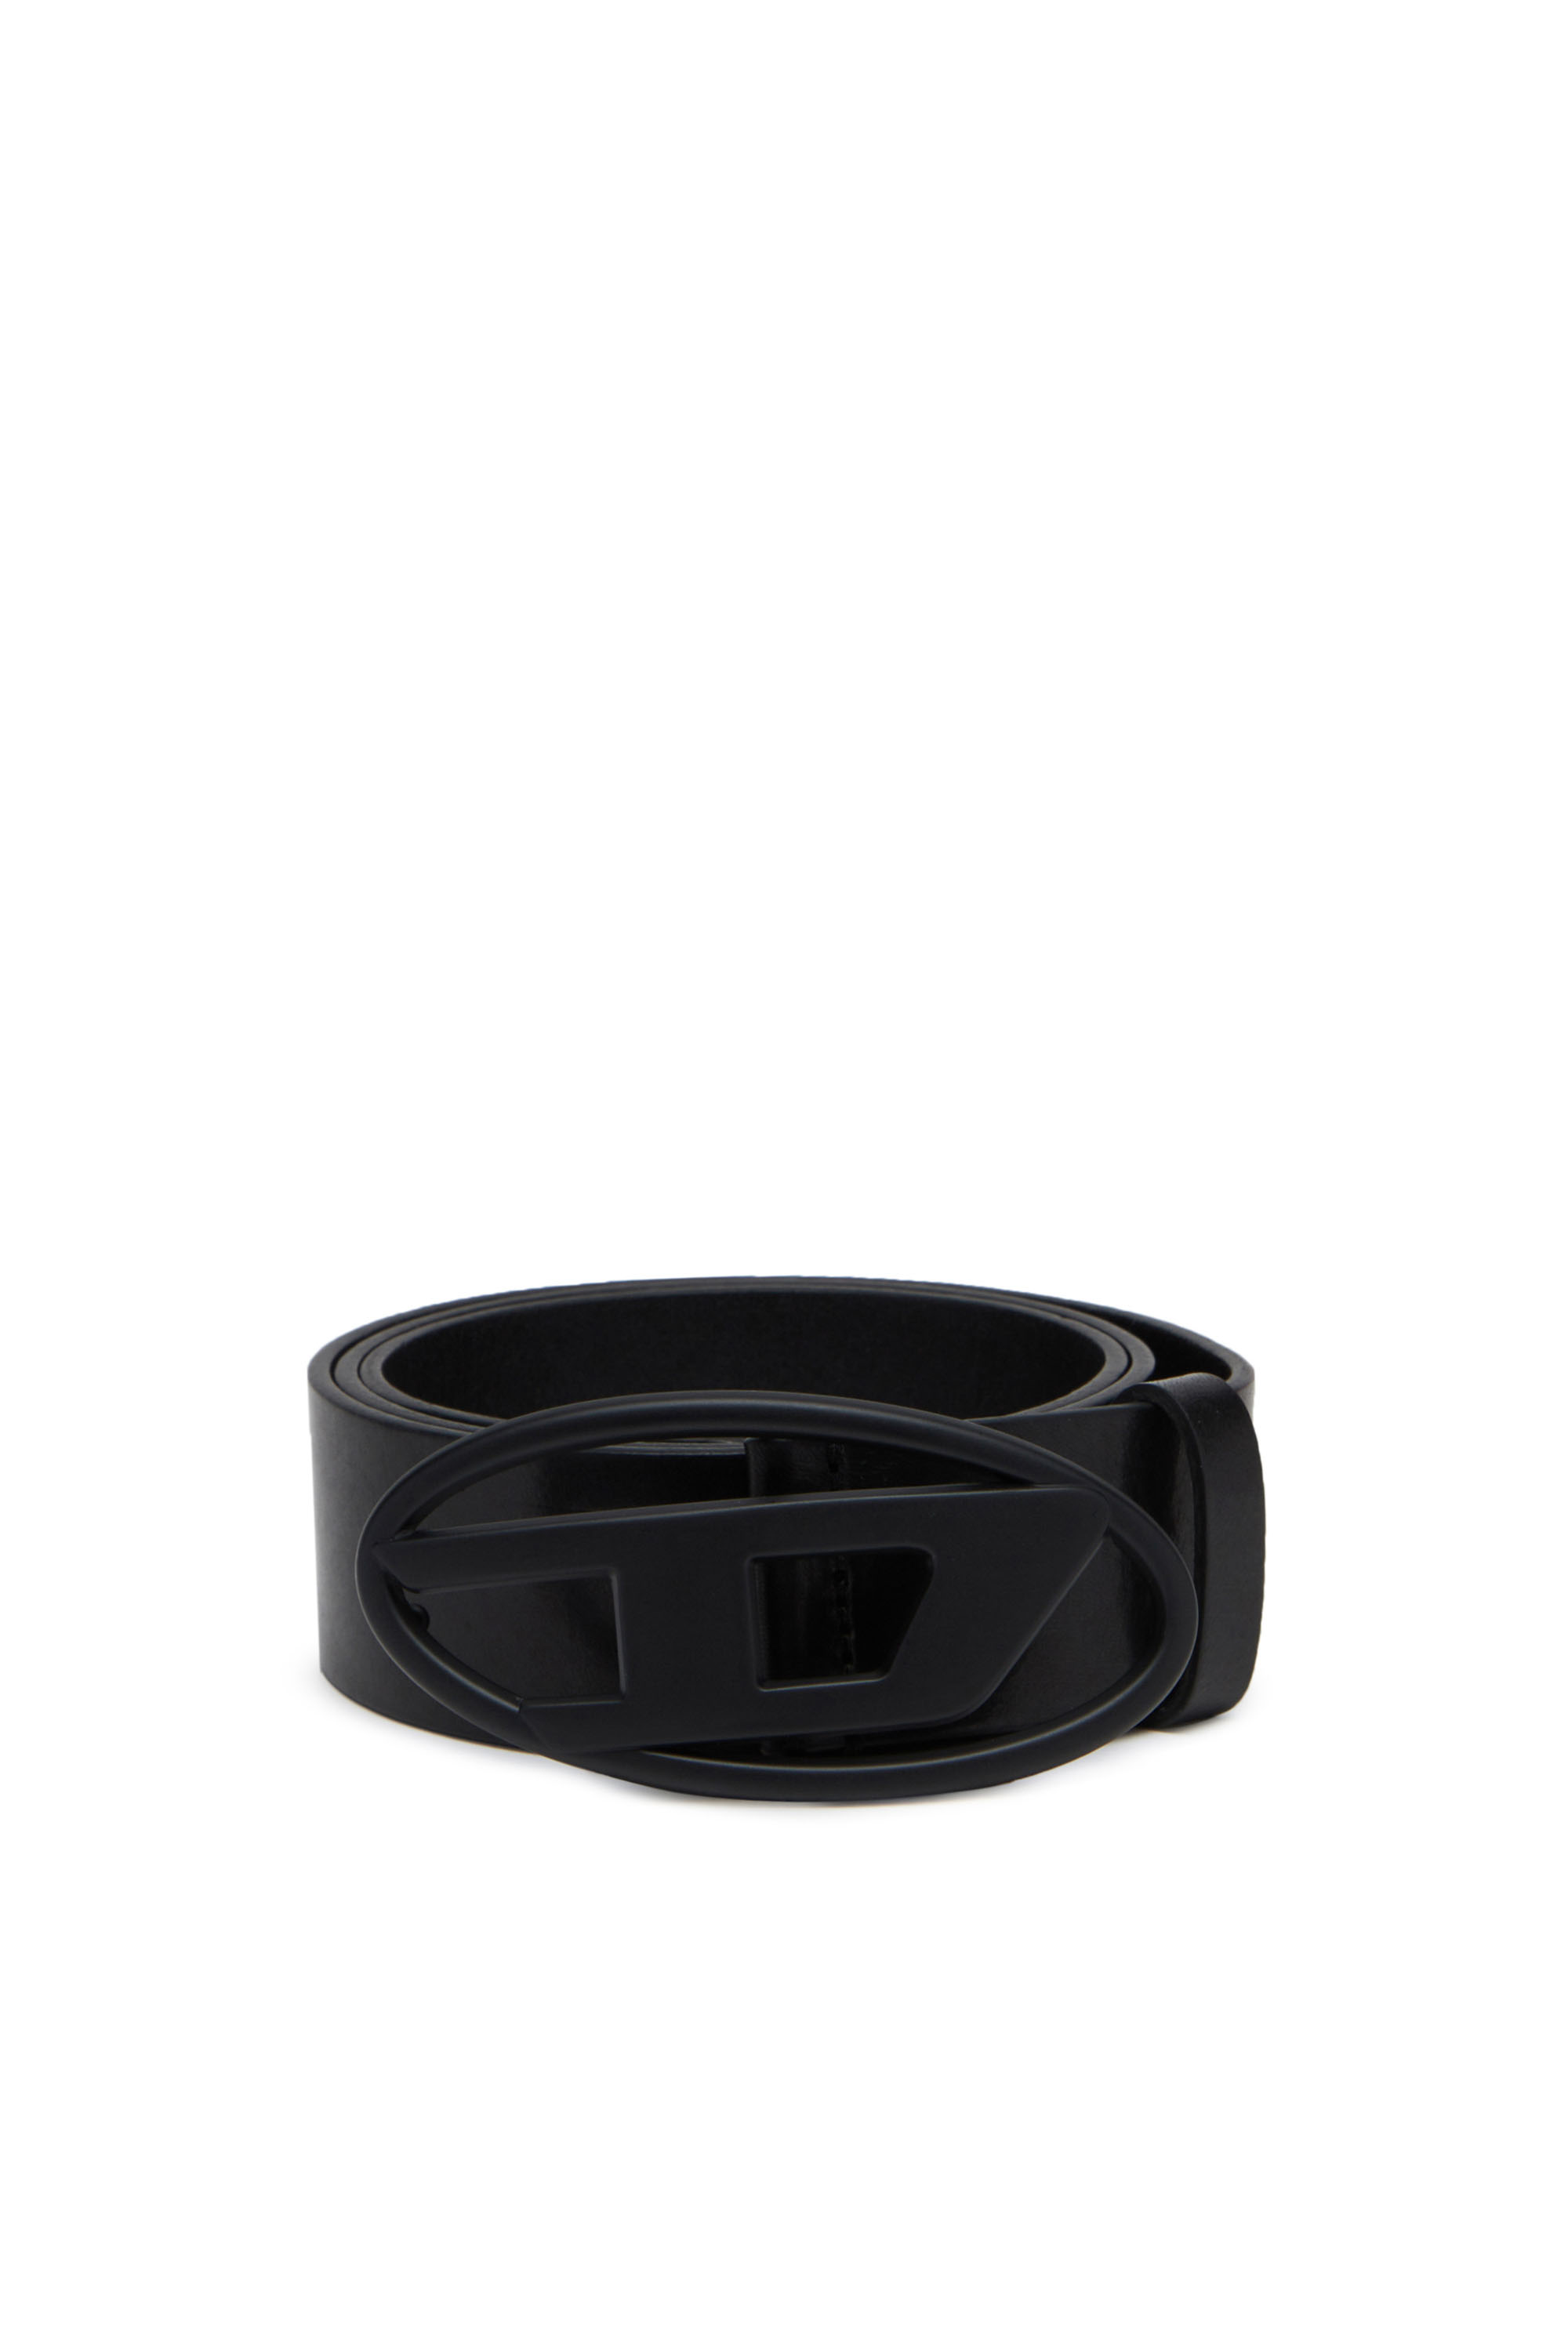 Diesel - Leather belt with tonal buckle - Belts - Unisex - Black